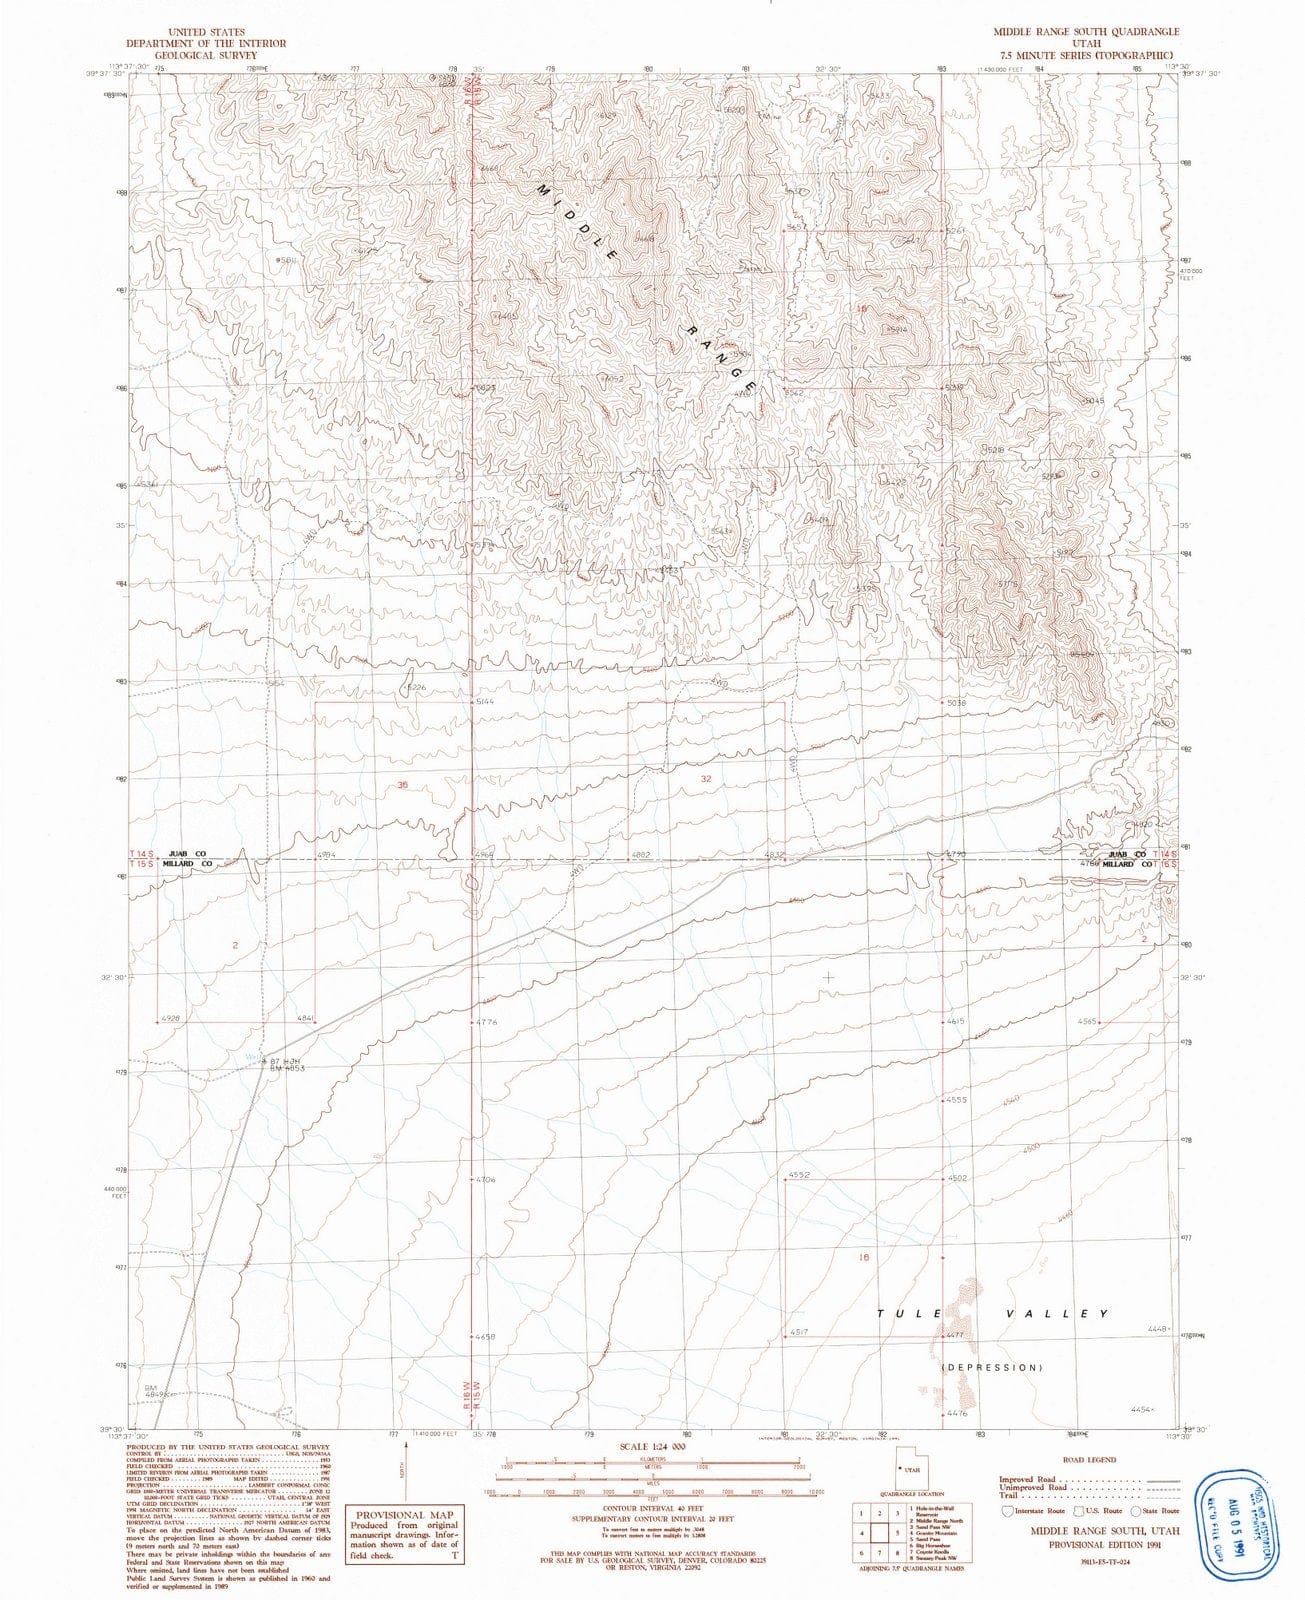 1991 Middle Range South, UT - Utah - USGS Topographic Map